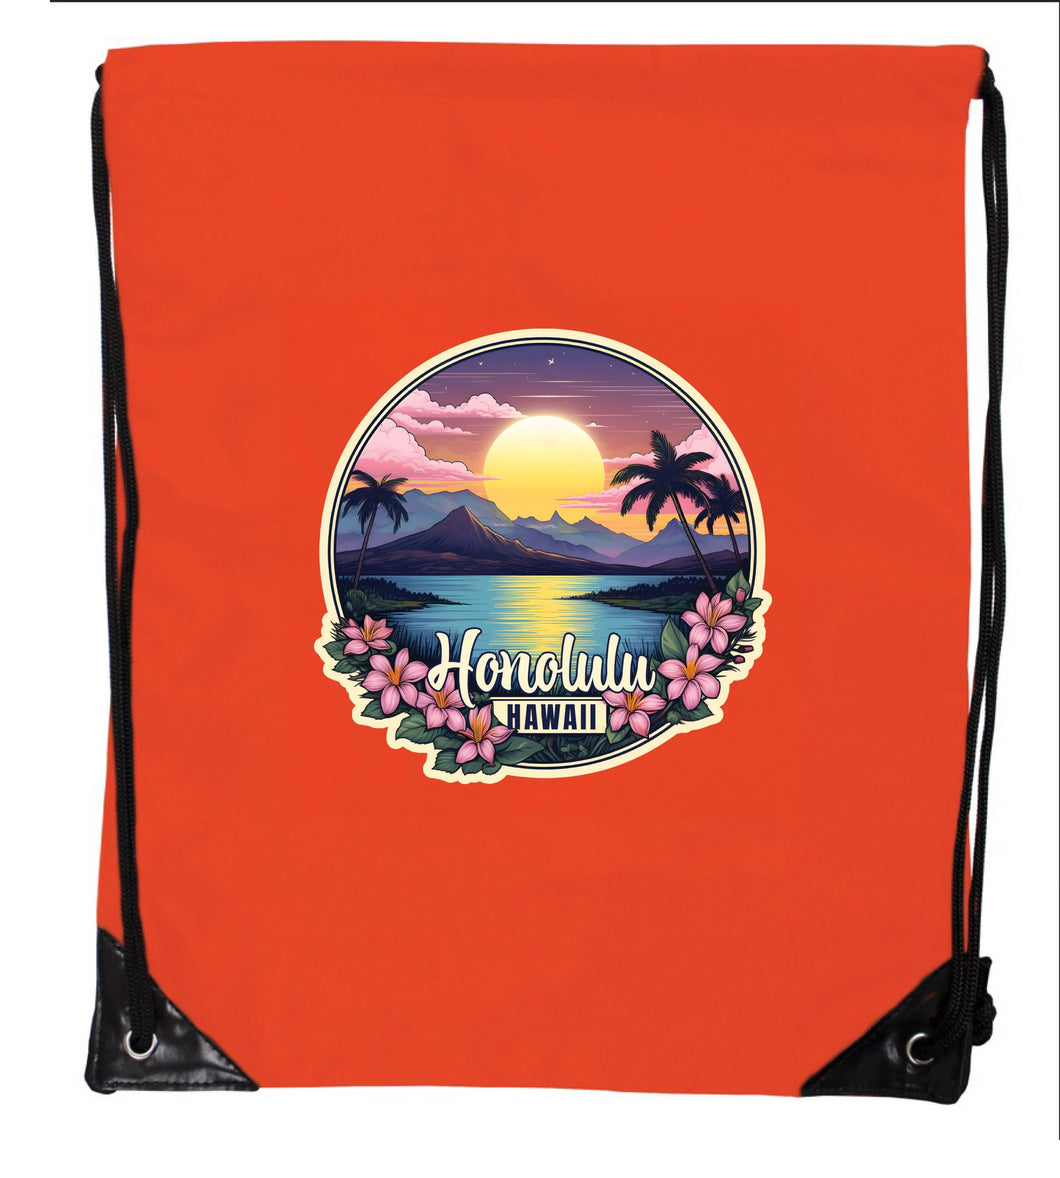 Honolulu Hawaii B Souvenir Cinch Bag with Drawstring Backpack